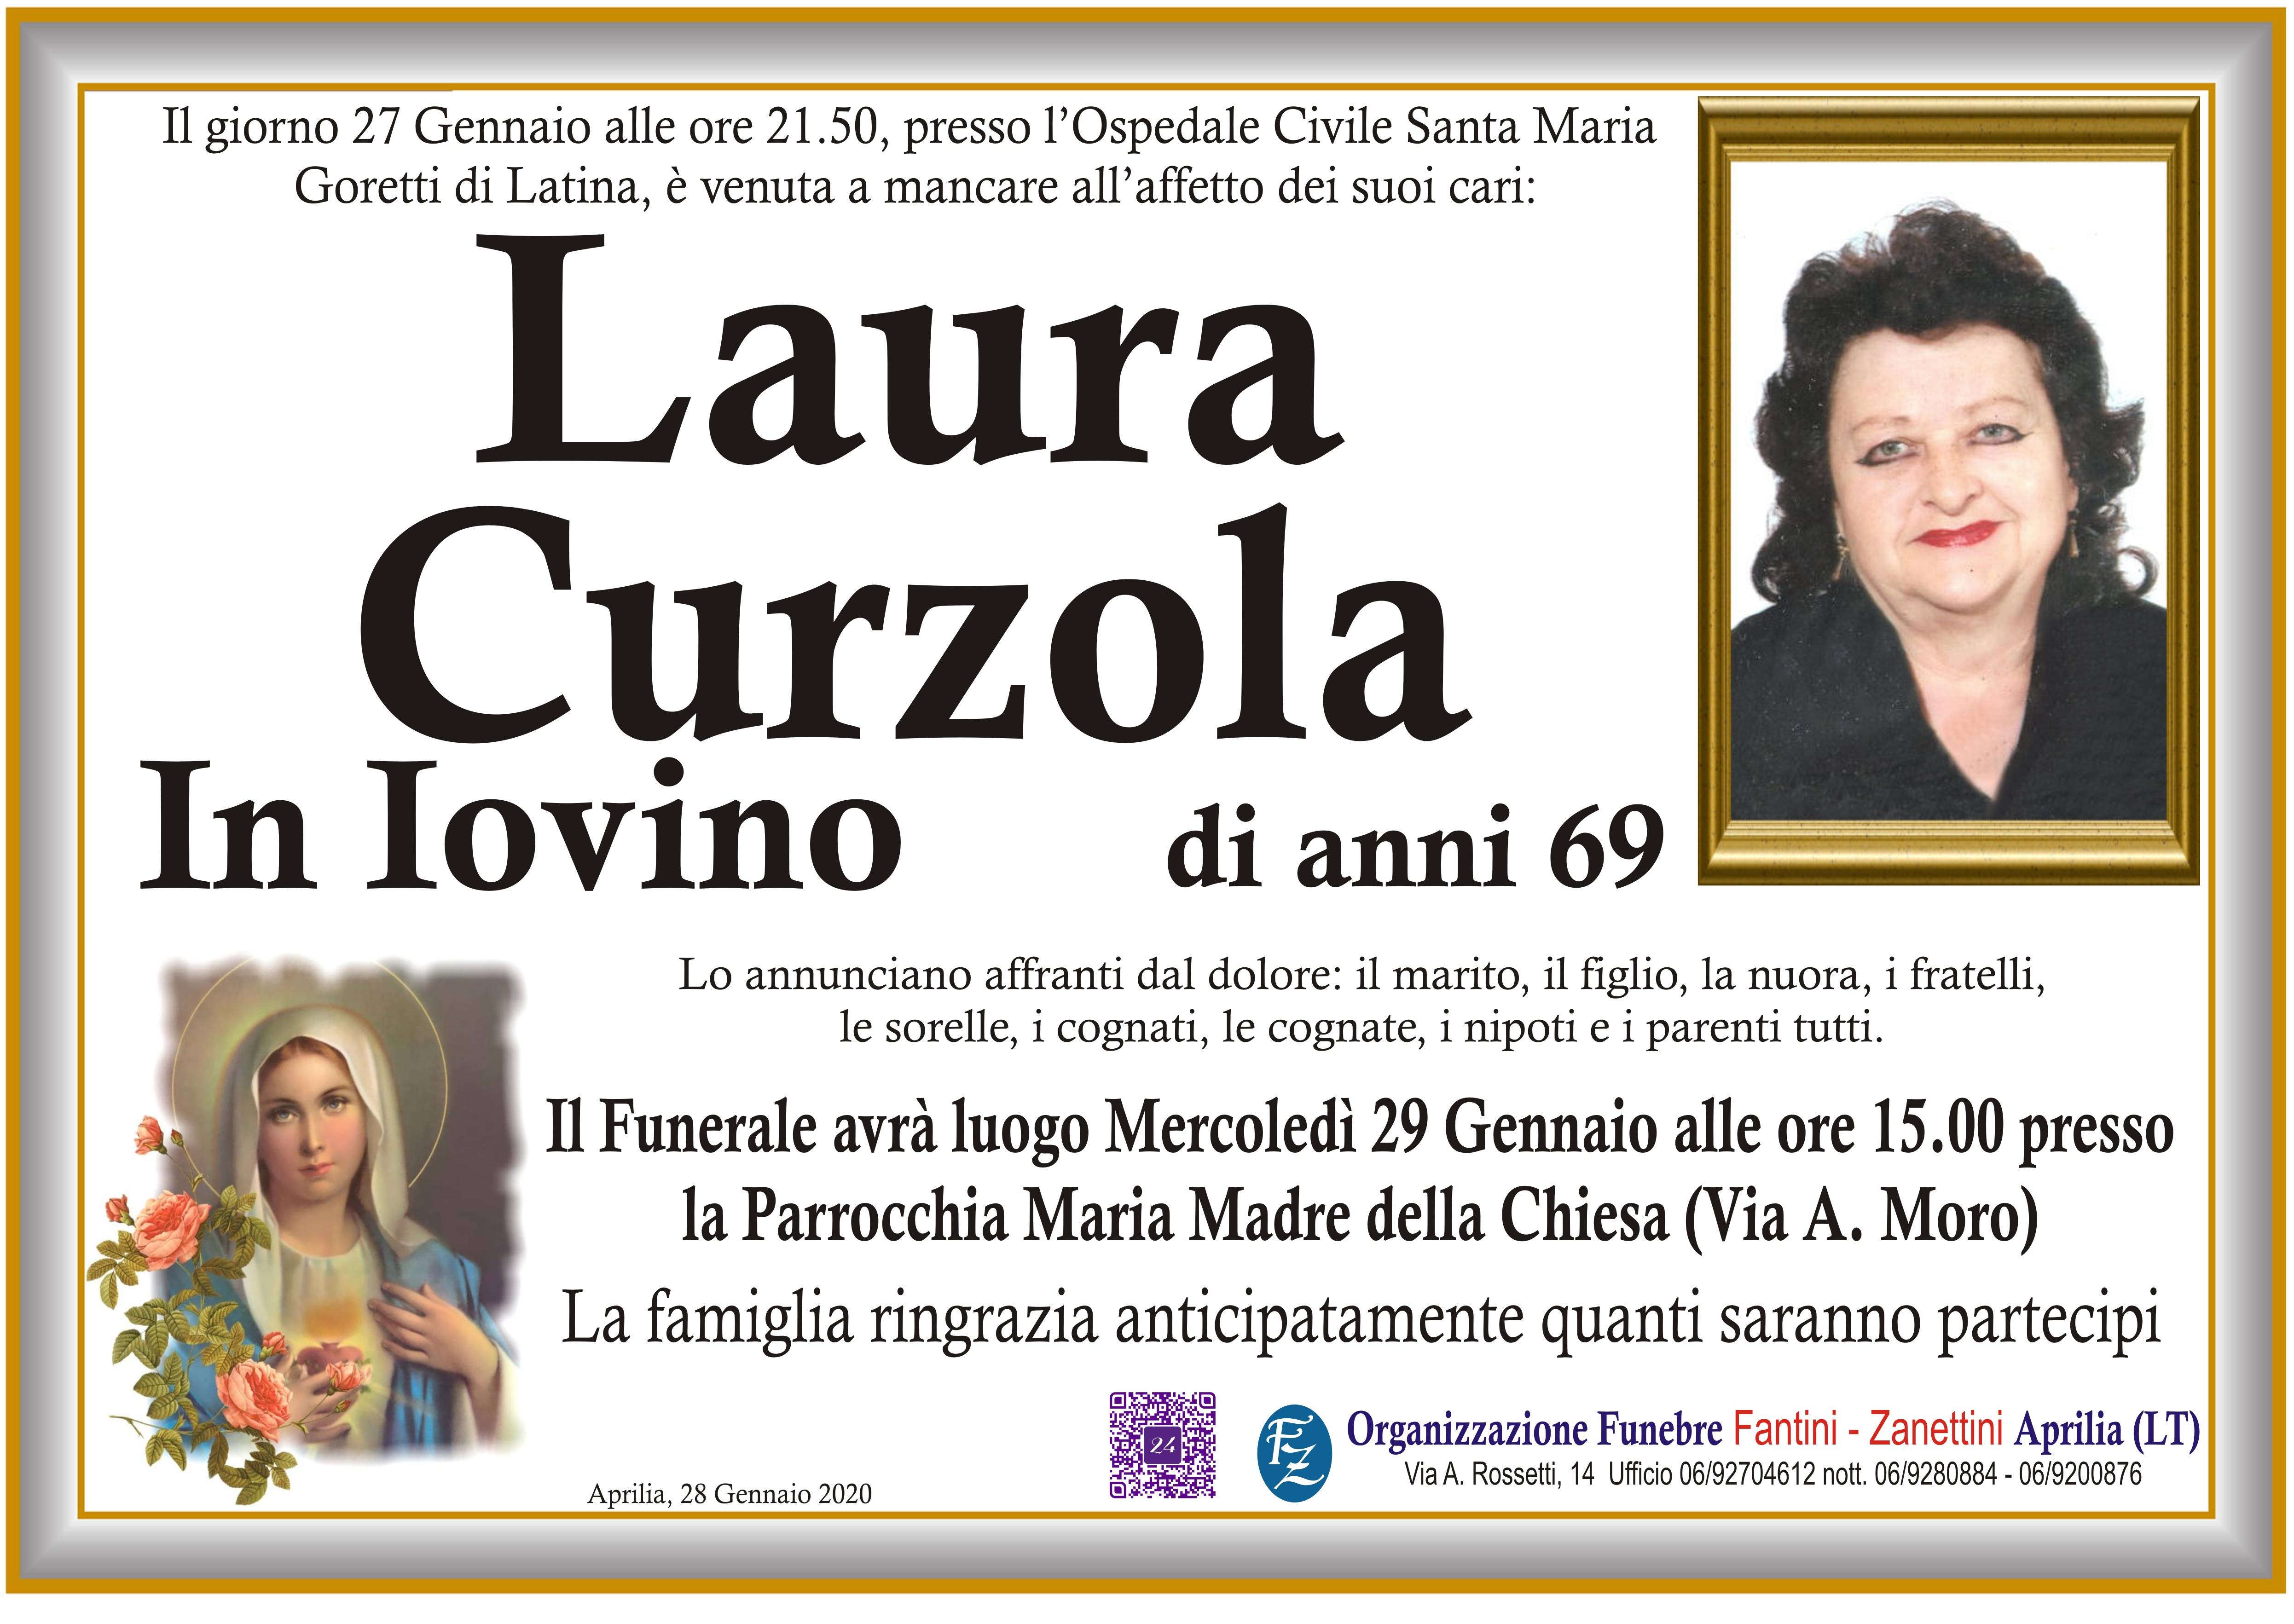 Laura Curzola